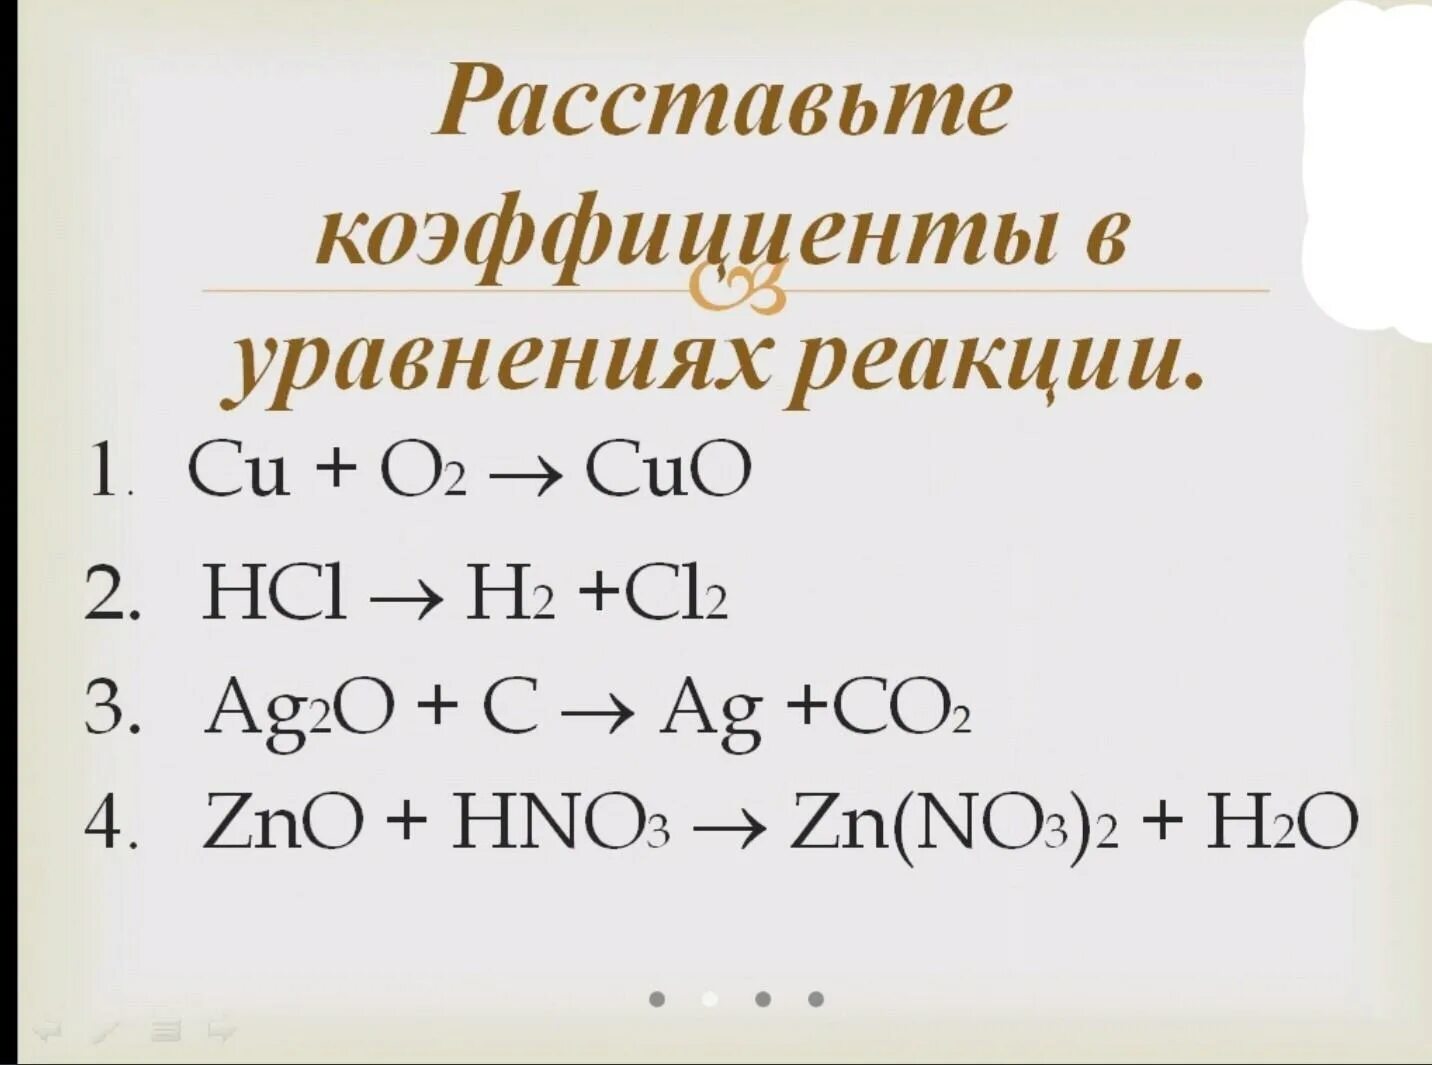 Zn mgo hcl. Задание на расстановку коэффициентов. Задачи на расстановку коэффициентов в химических уравнениях. Коэффициенты в уравнении реакции. Уравнения на коэффициенты по химии.